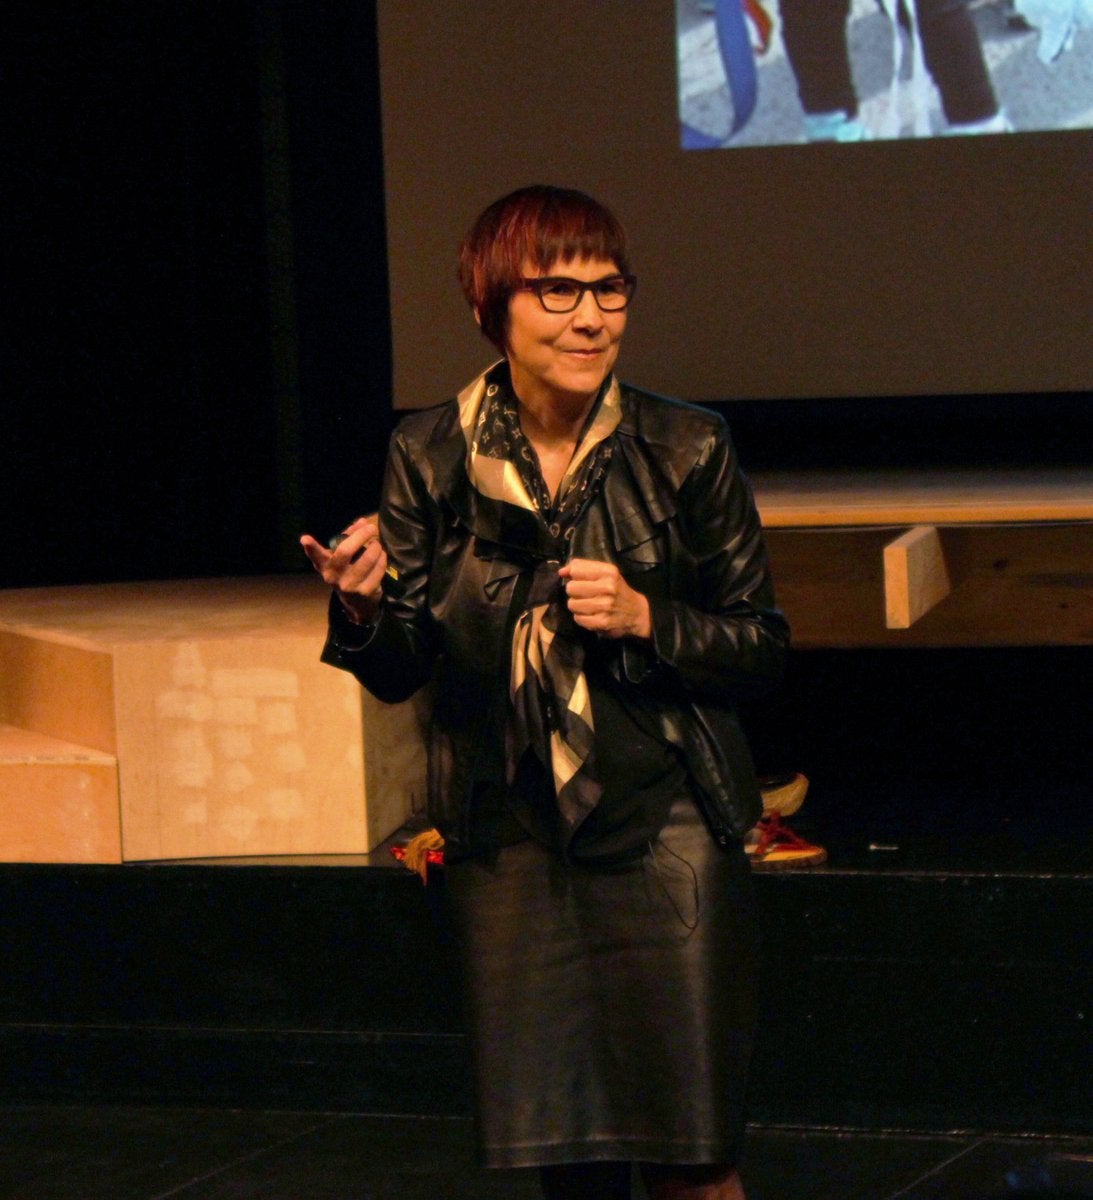 Cindy Blackstock on stage speaking